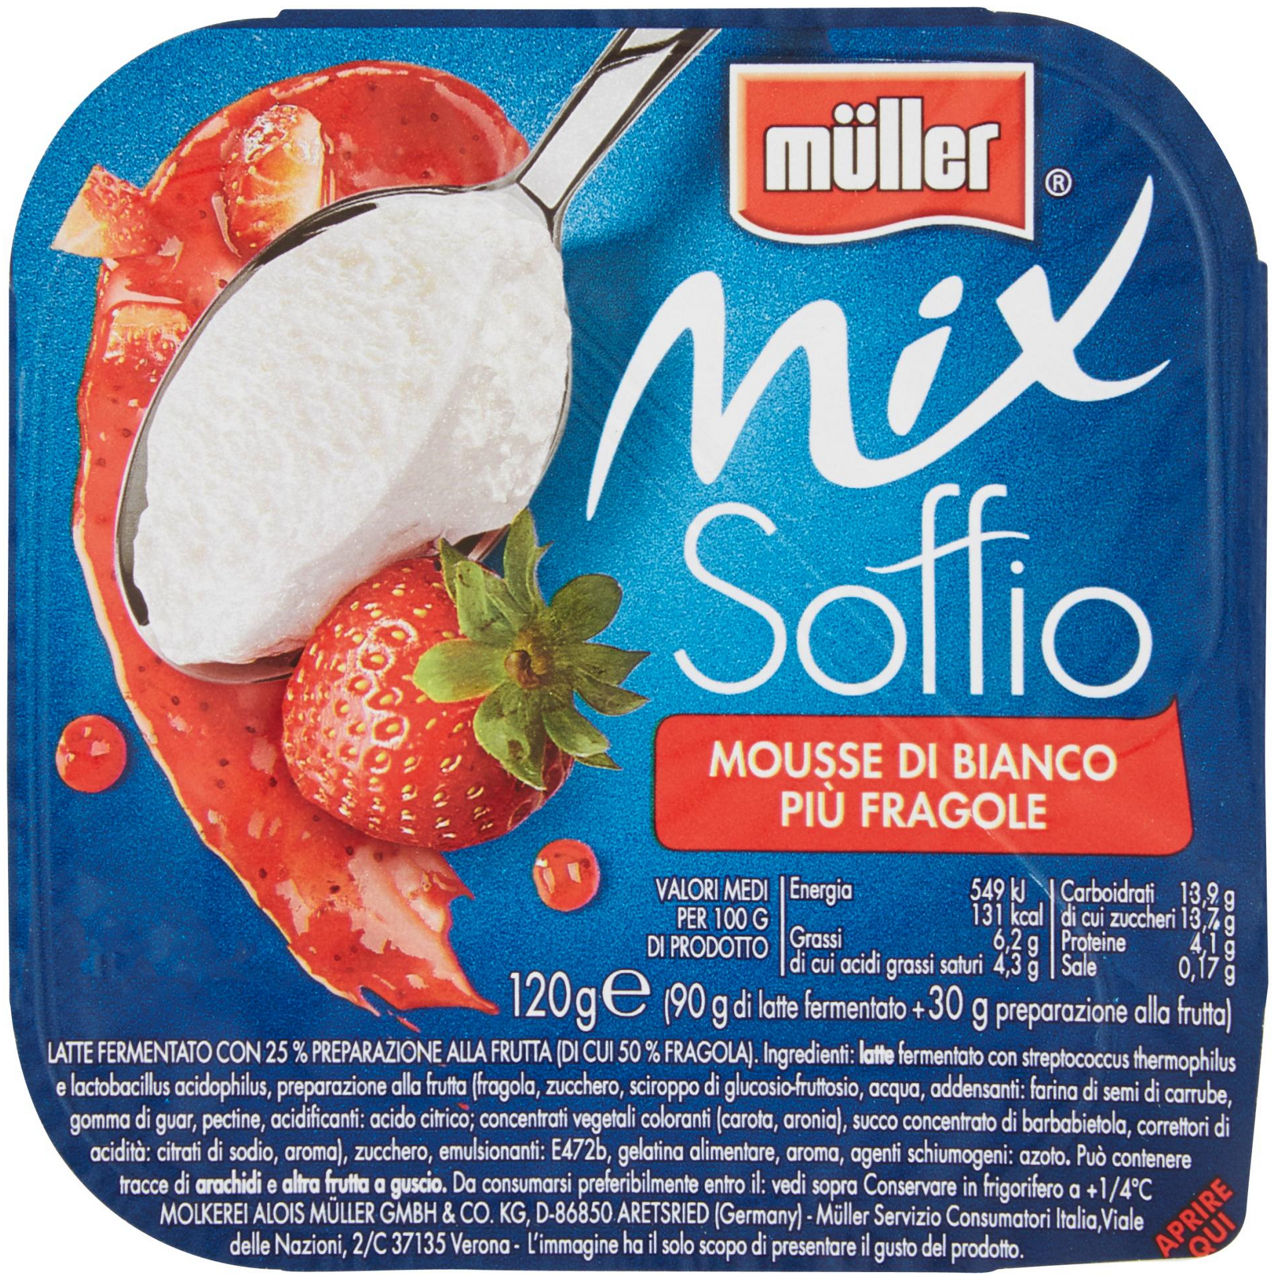 Yogurt mix soffio più fragola muller g 120